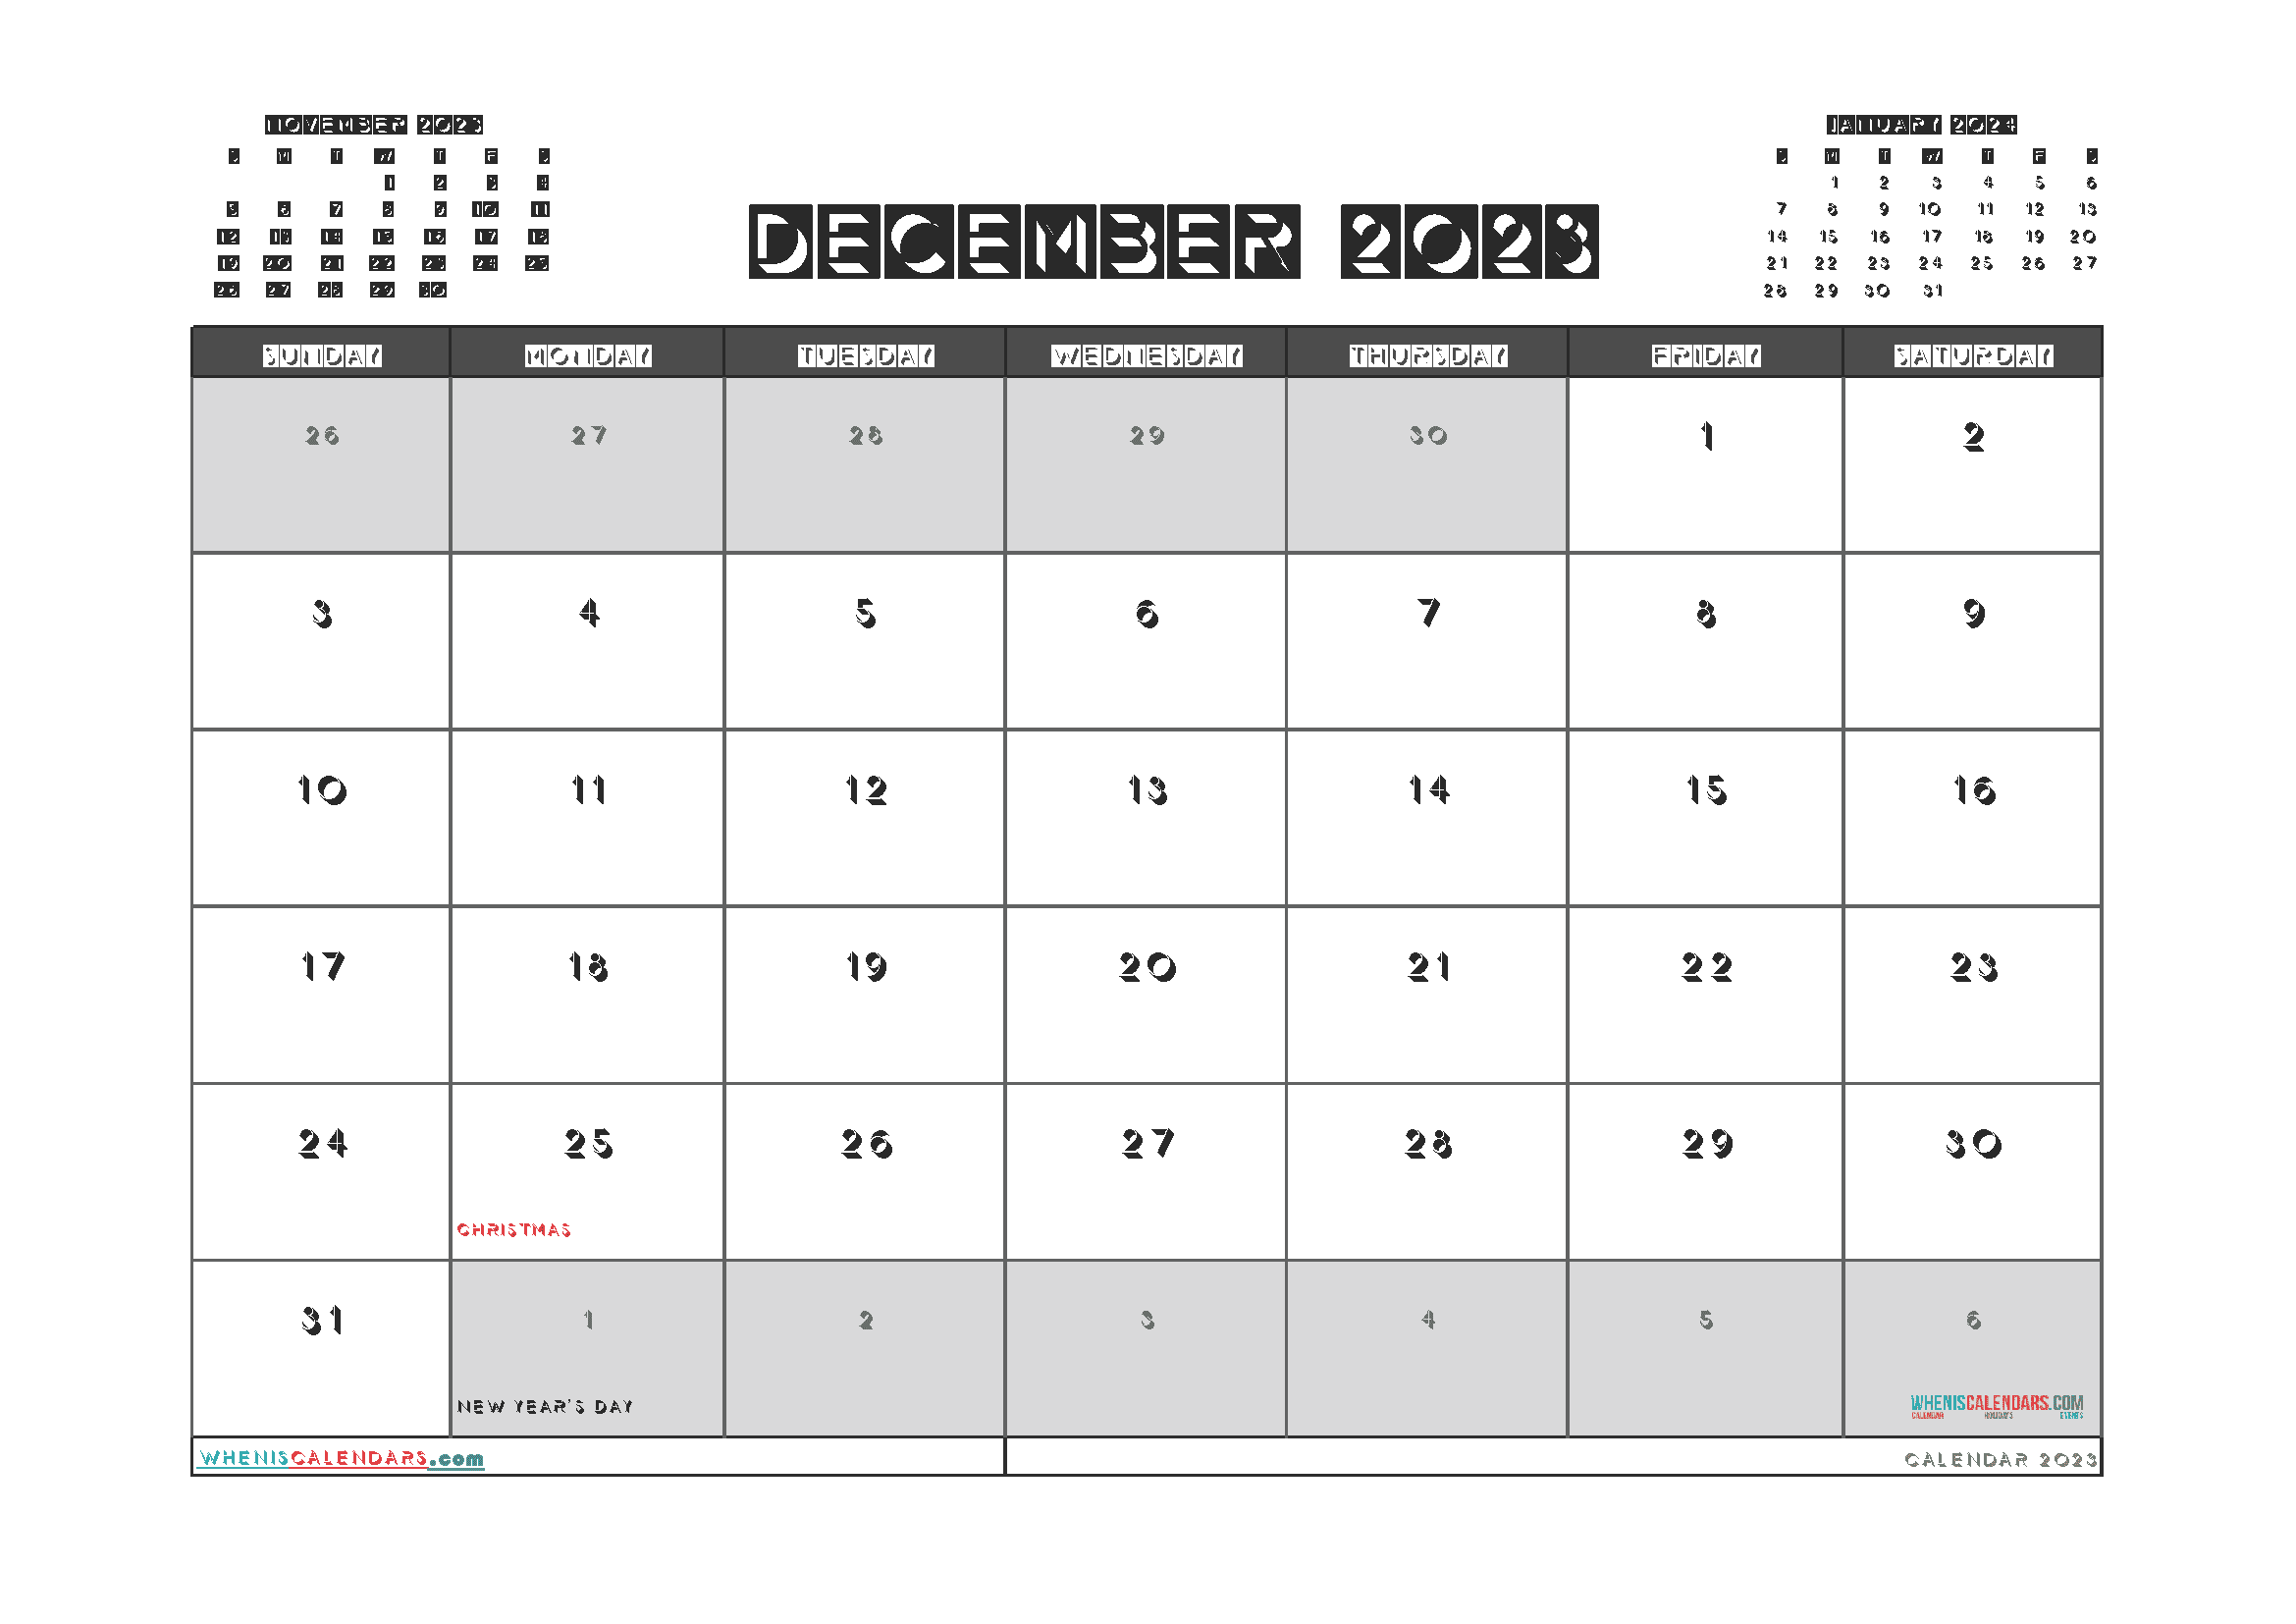 Free December 2023 Calendar with Holidays Printable PDF in Landscape